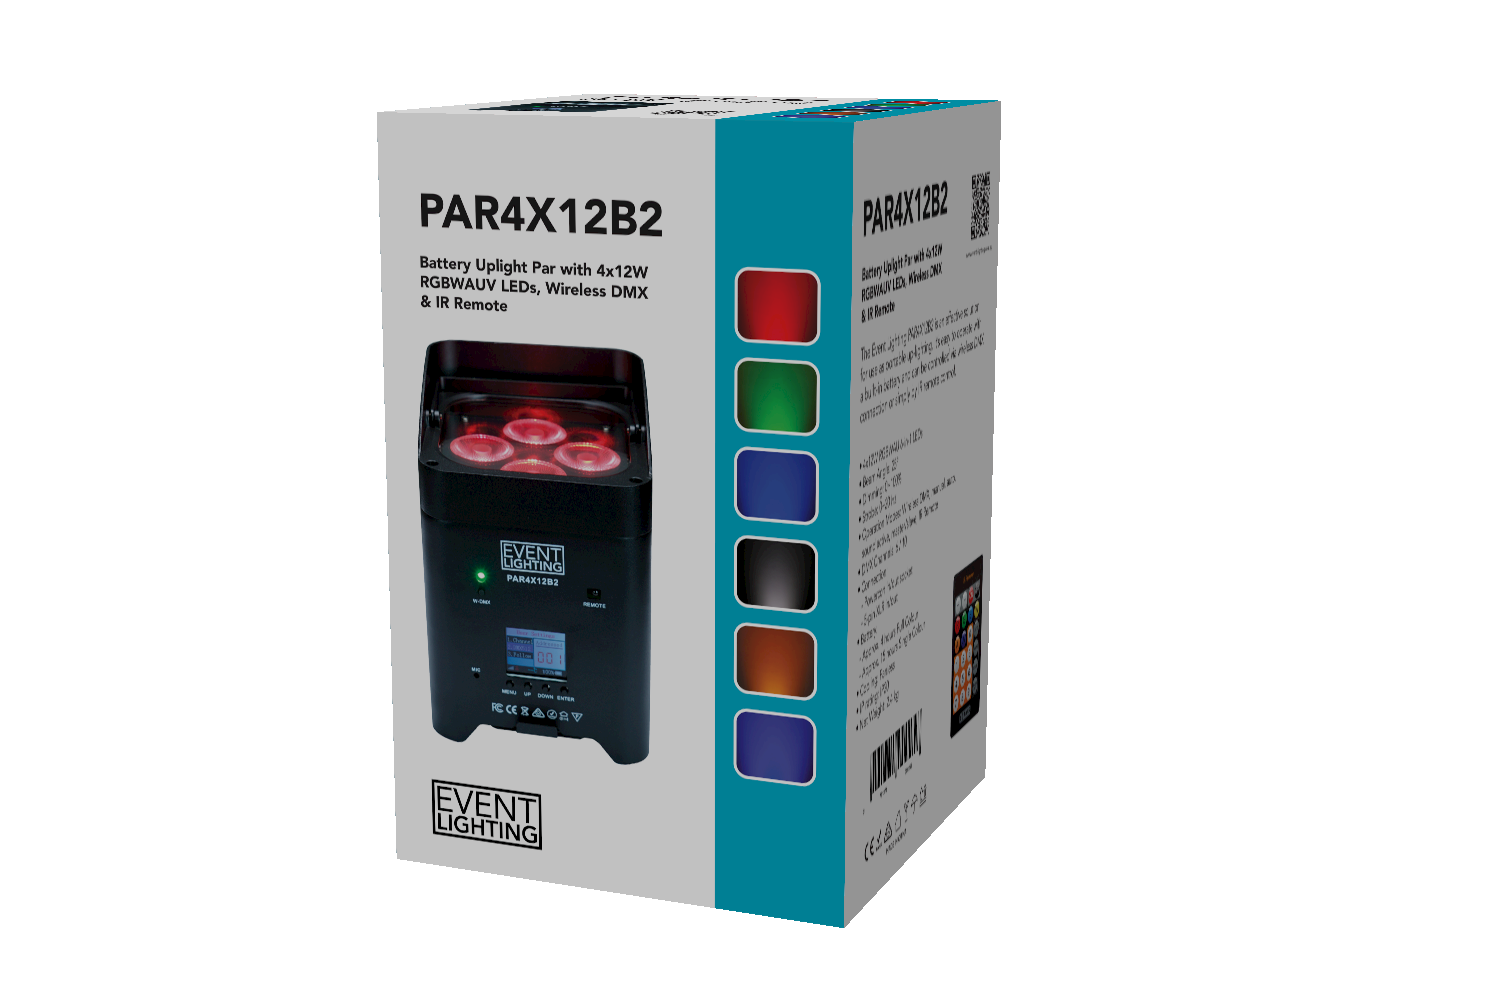 Event Lighting PAR4X12B2 - Battery Uplight 4x12W RGBWAUV LEDs, Wireless DMX & IR Remote